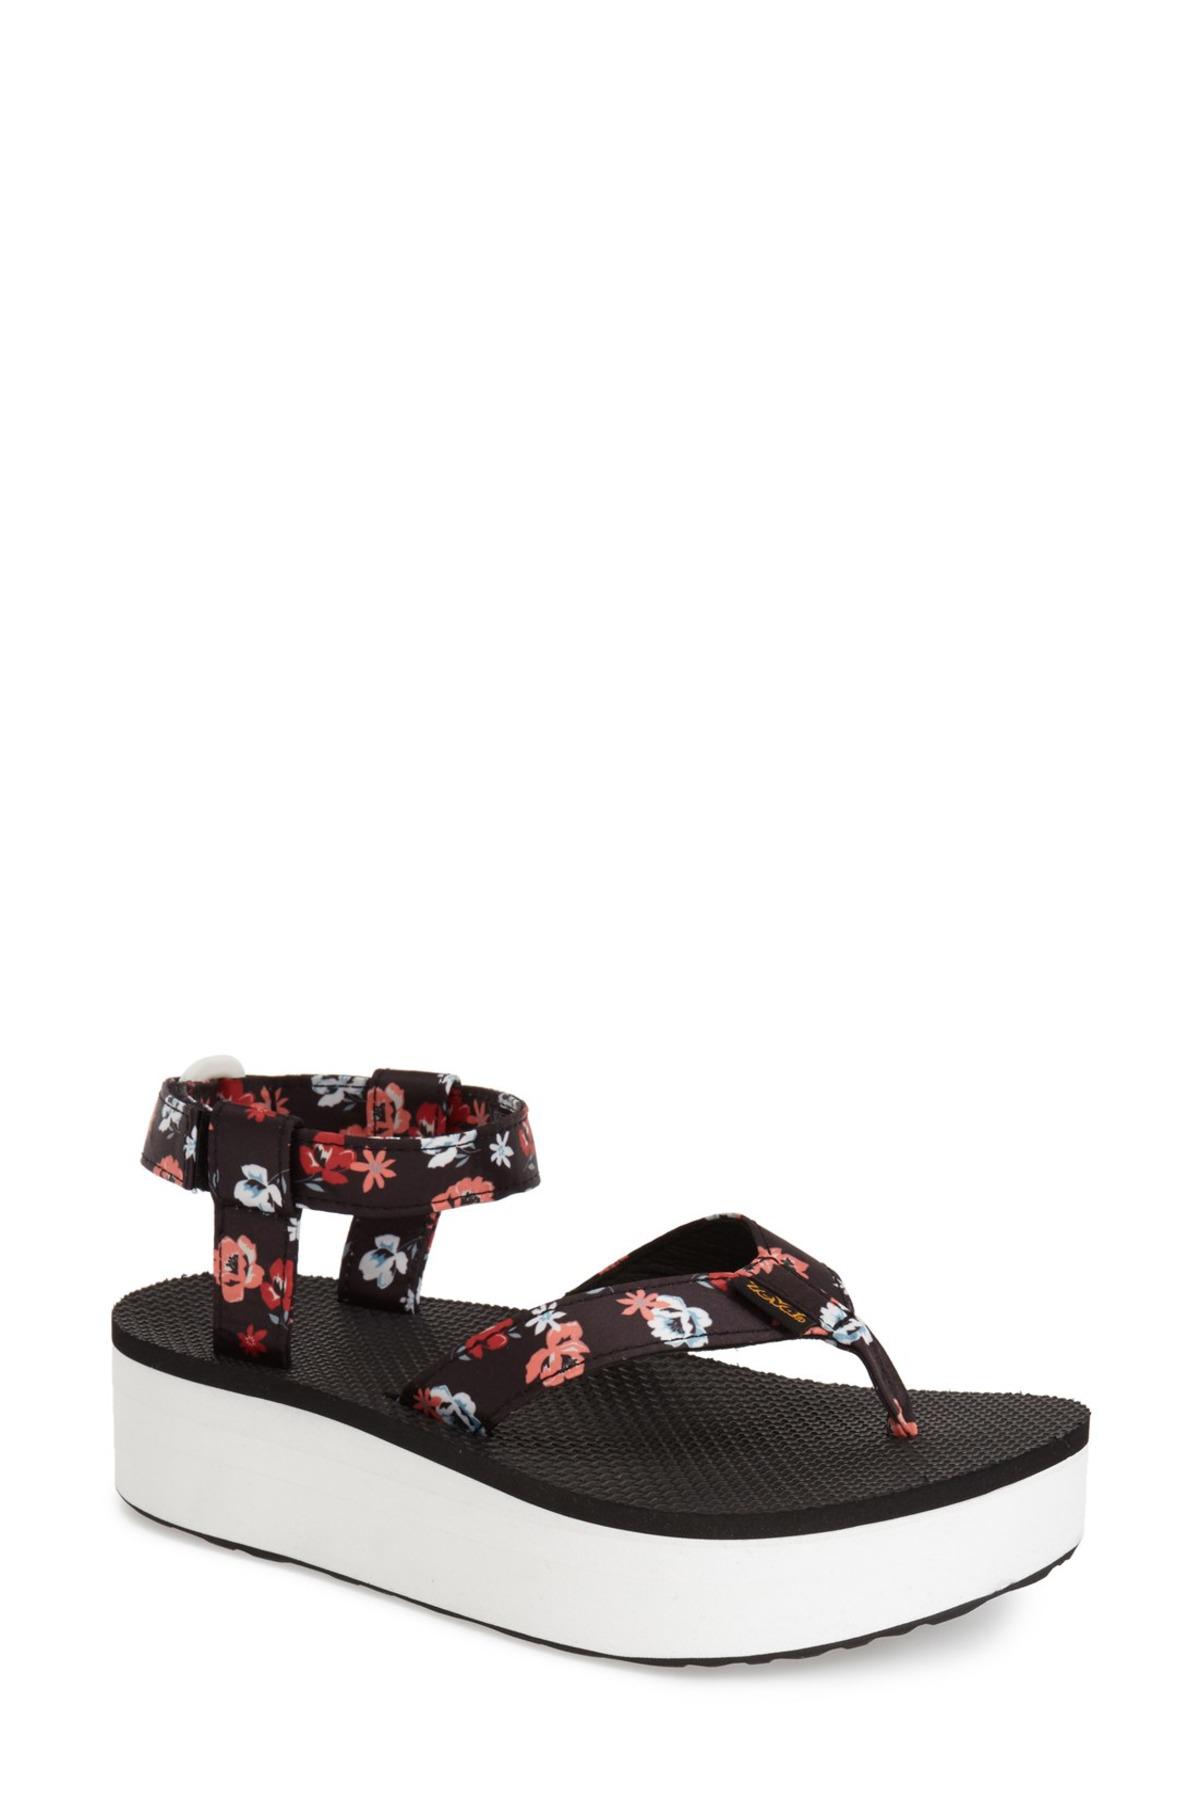 Teva Floral Flatform Thong Sandal in Black | Lyst